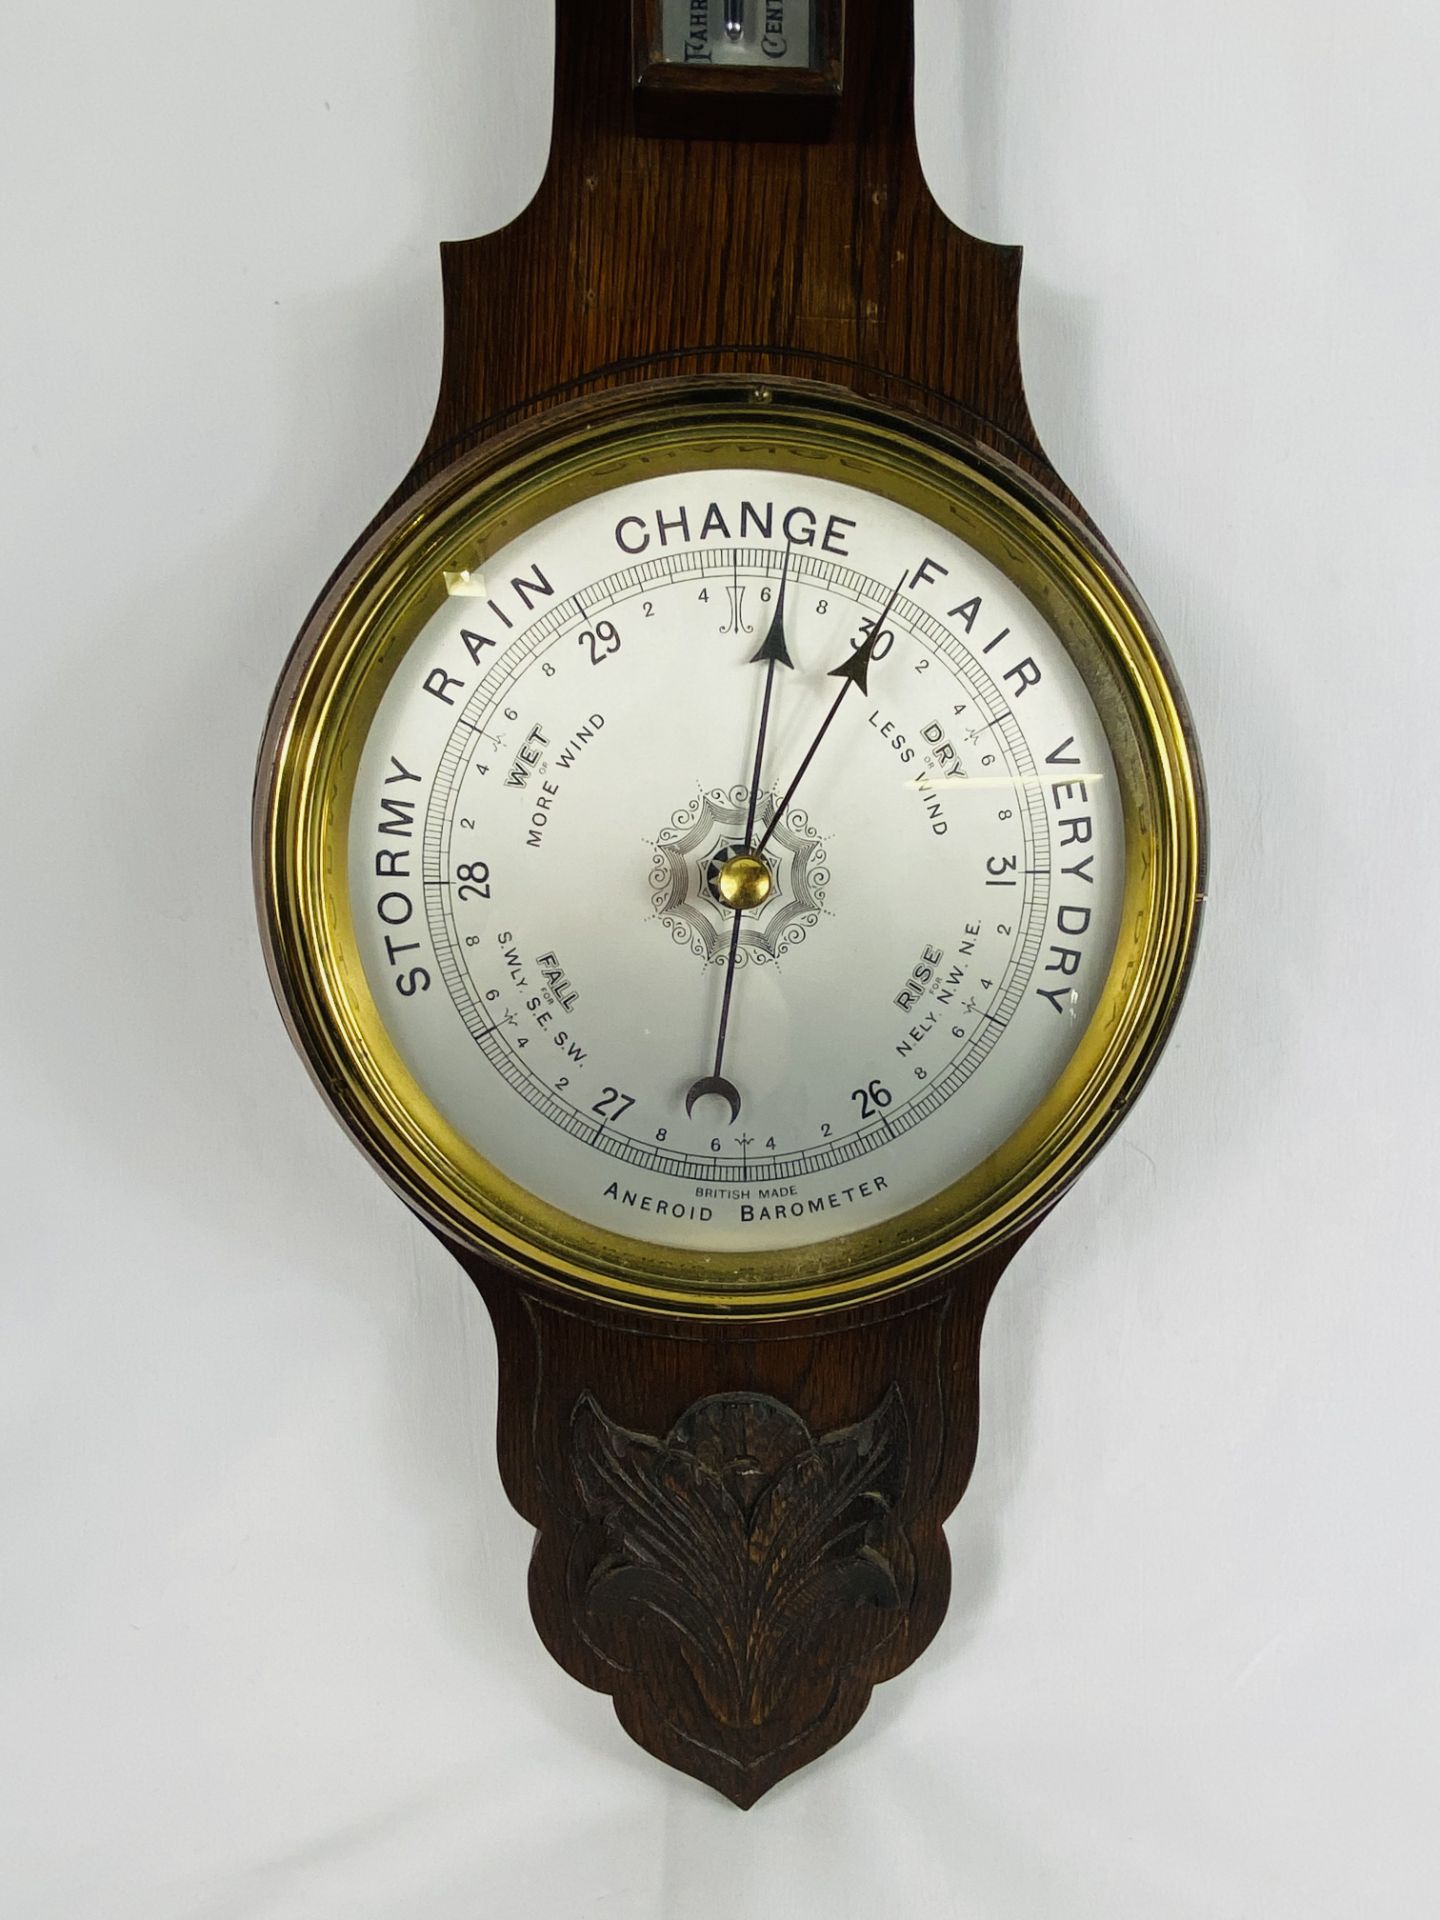 Mercury thermometer - Image 2 of 5